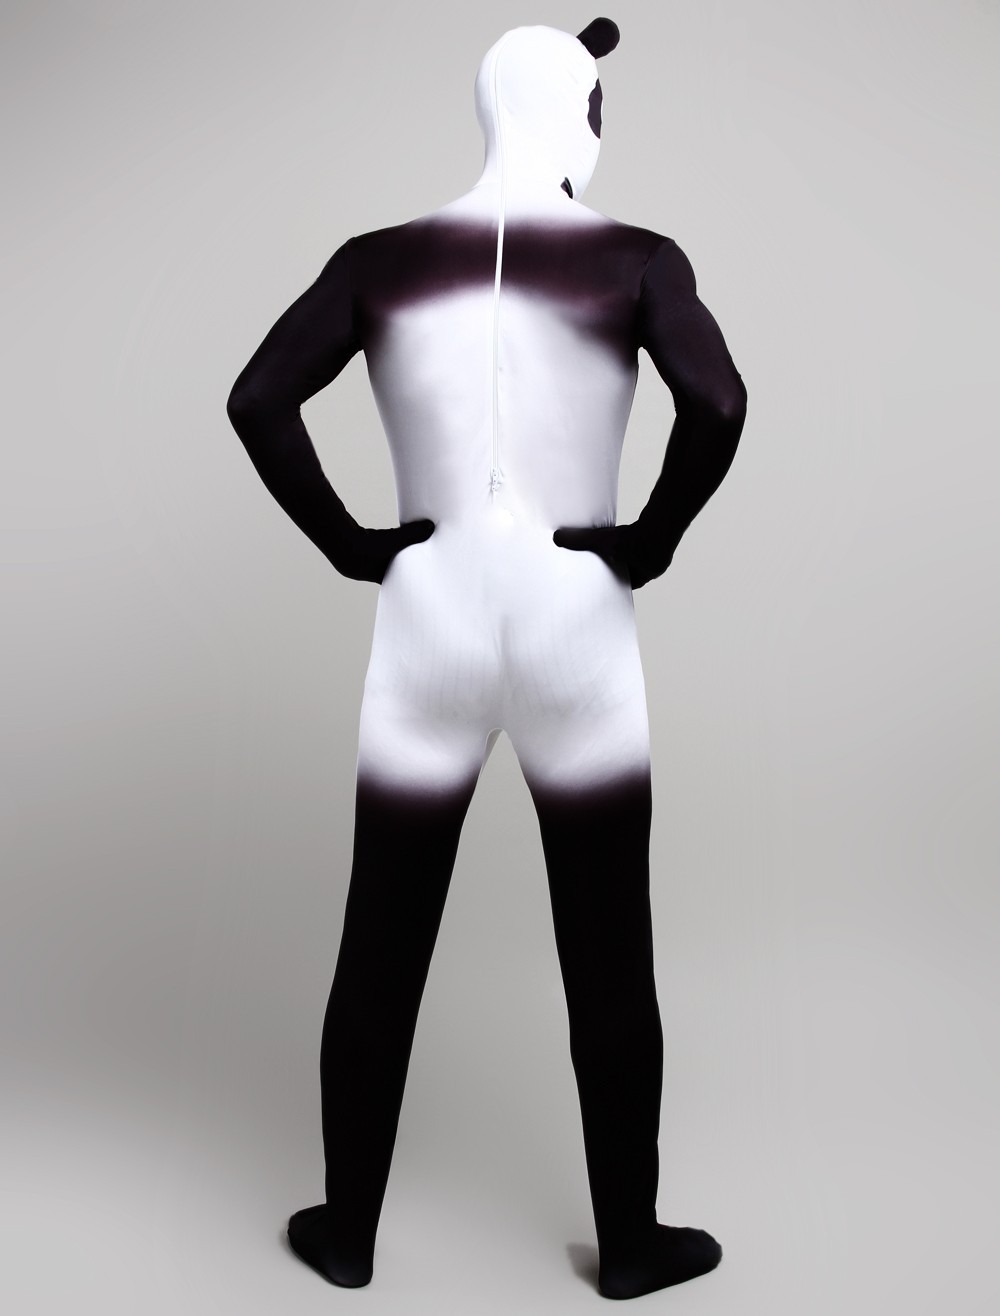 A Skin-Tight Totoro Full Body Spandex Suit  Spandex bodysuit, Zentai suit,  Halloween costume suit